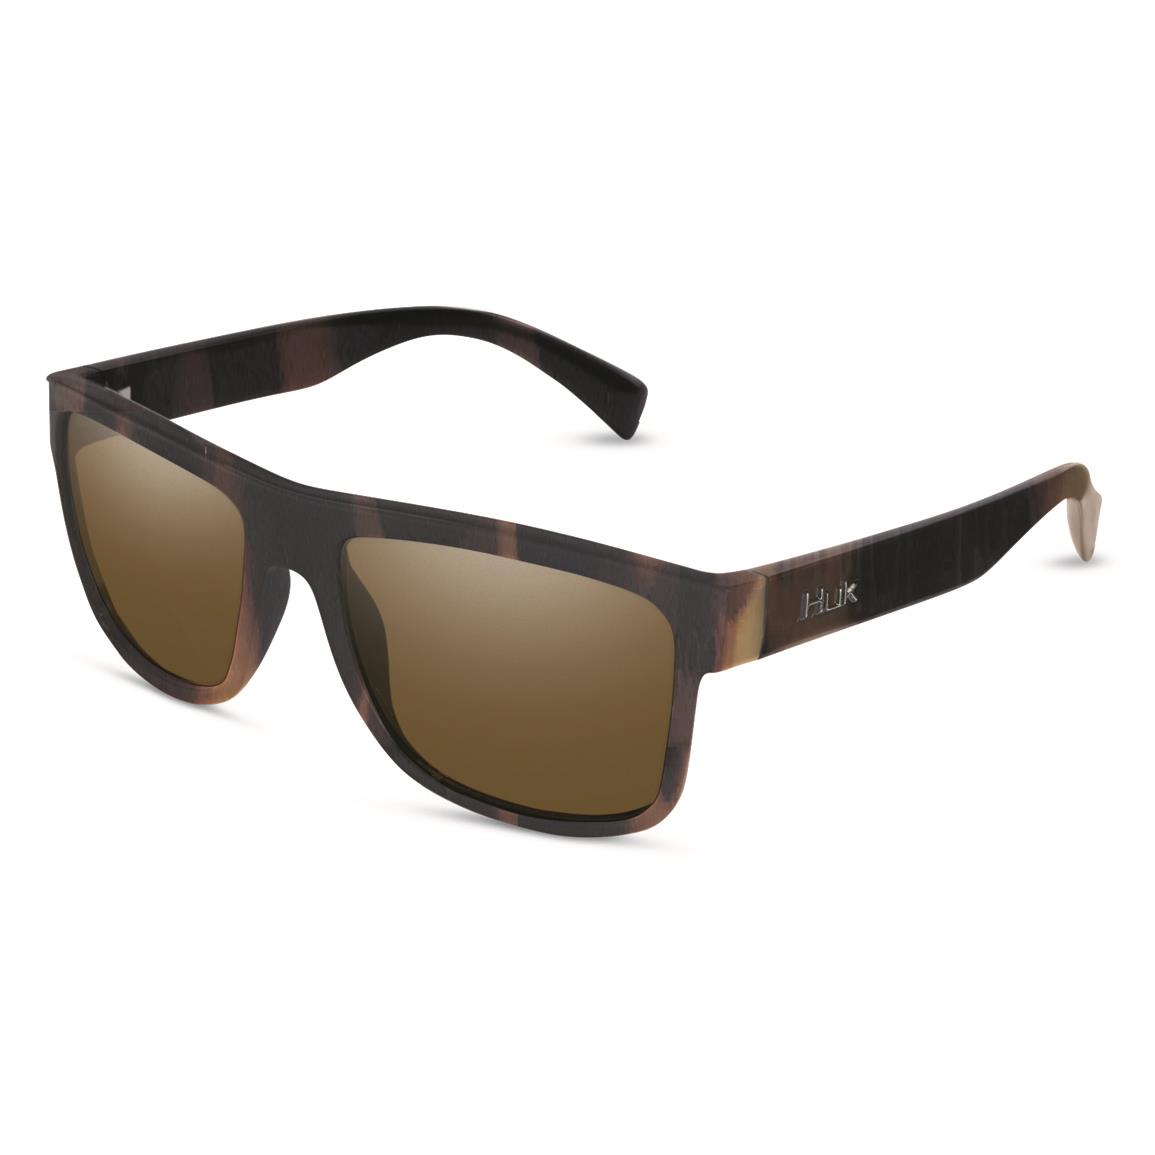 Huk Men's Clinch Polarized Sunglasses, Brown Tort/brown